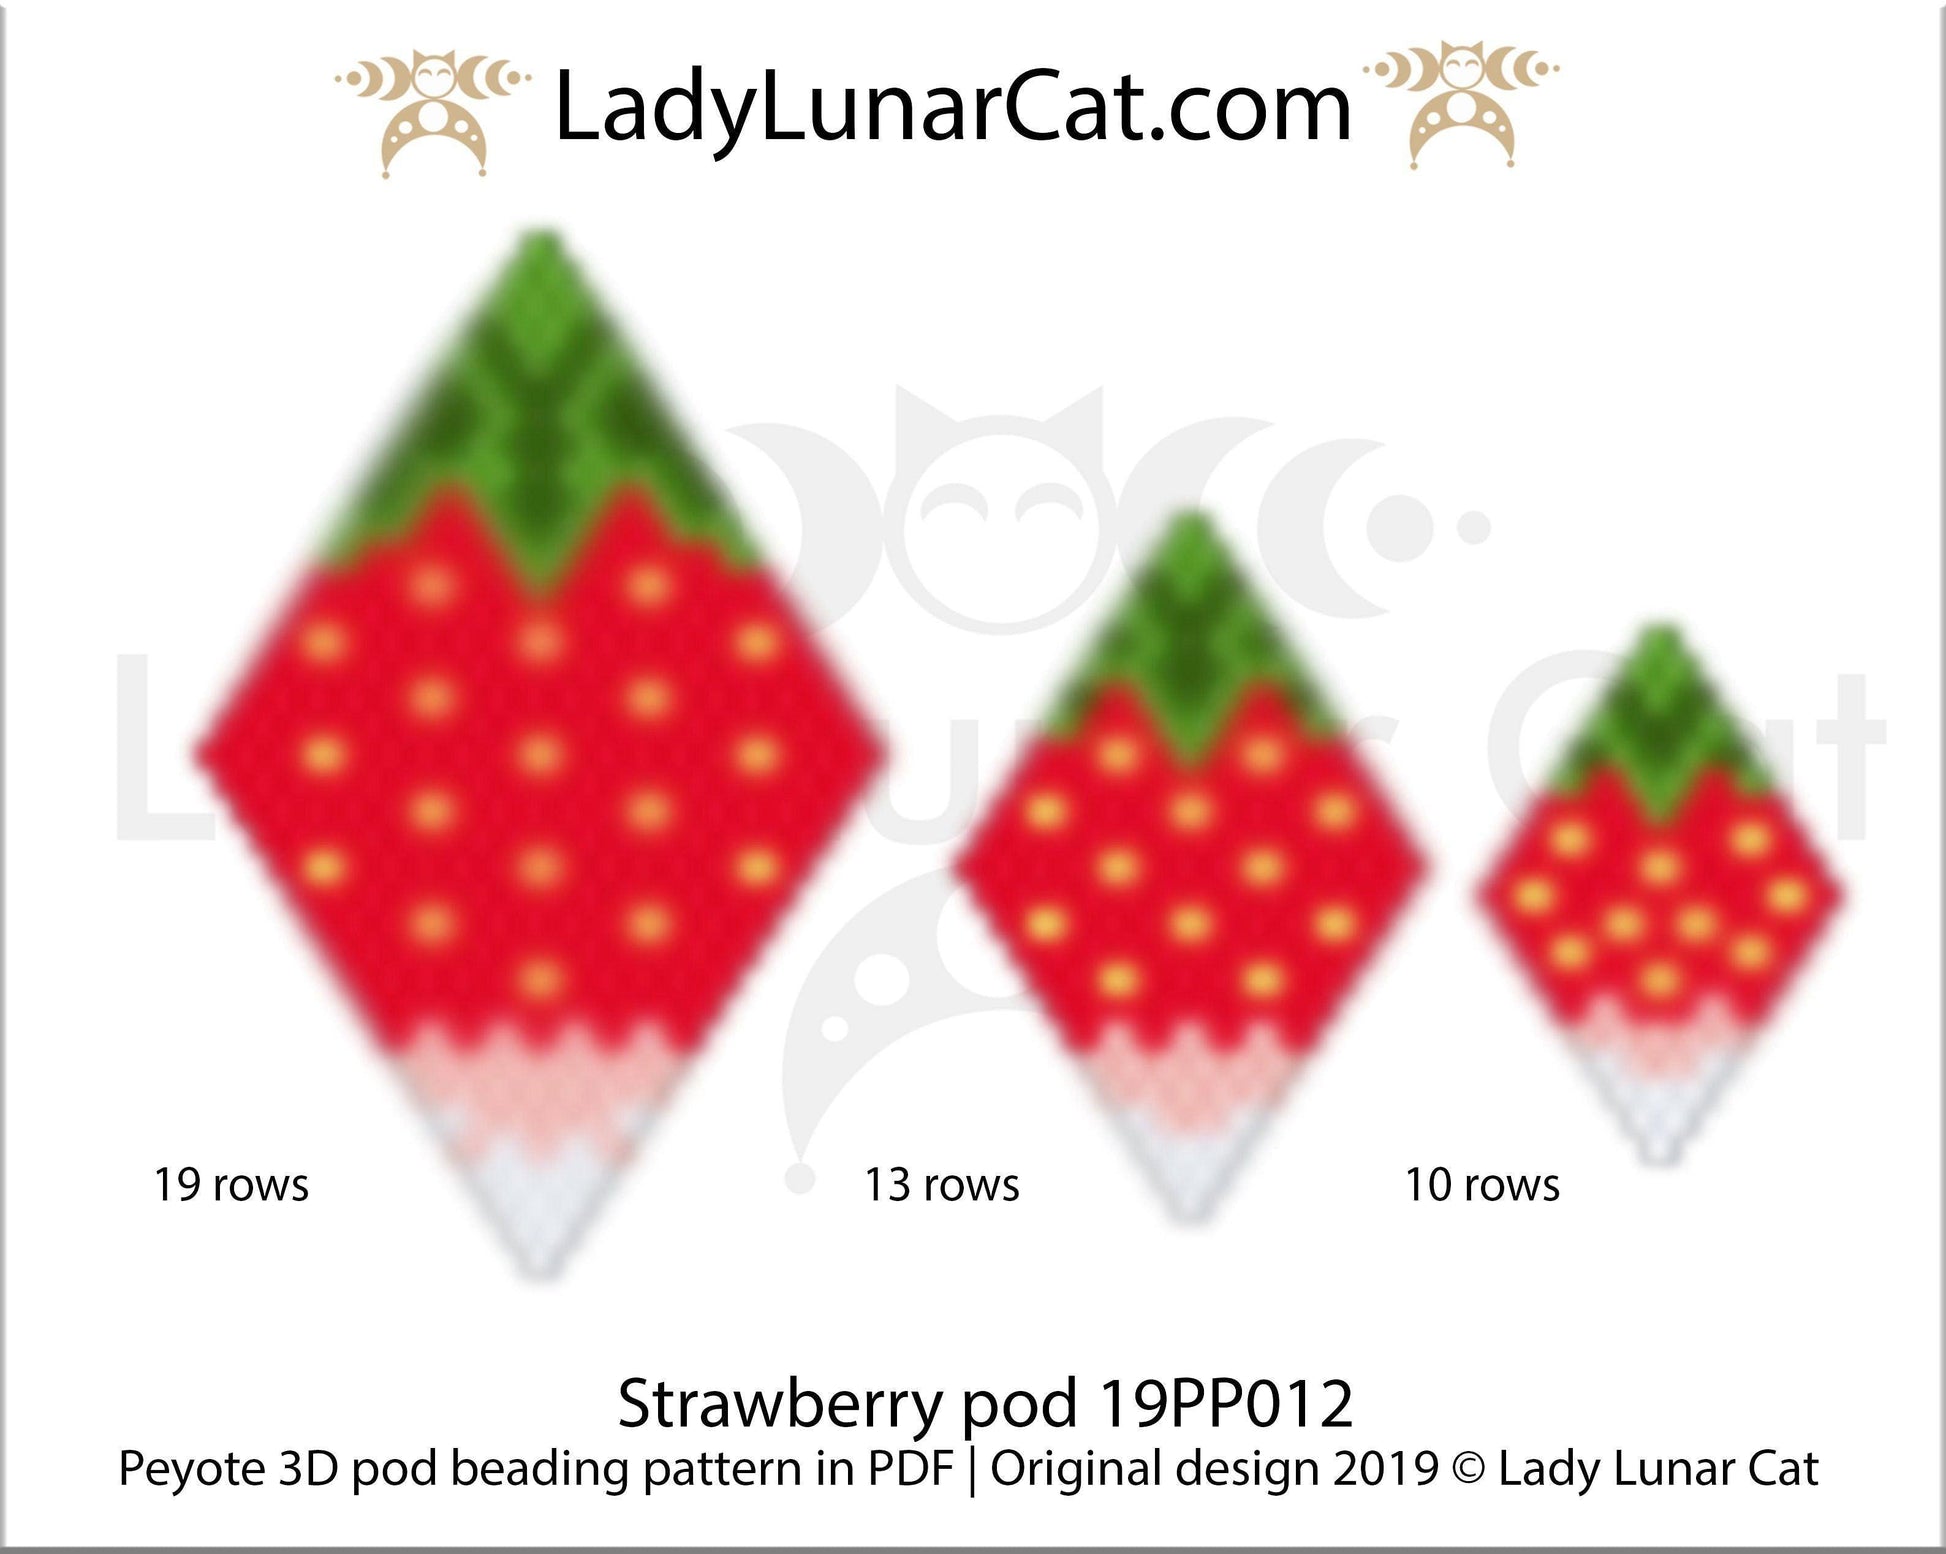 Beading tutorial for 3d peyote pod patterns Strawberry LadyLunarCat